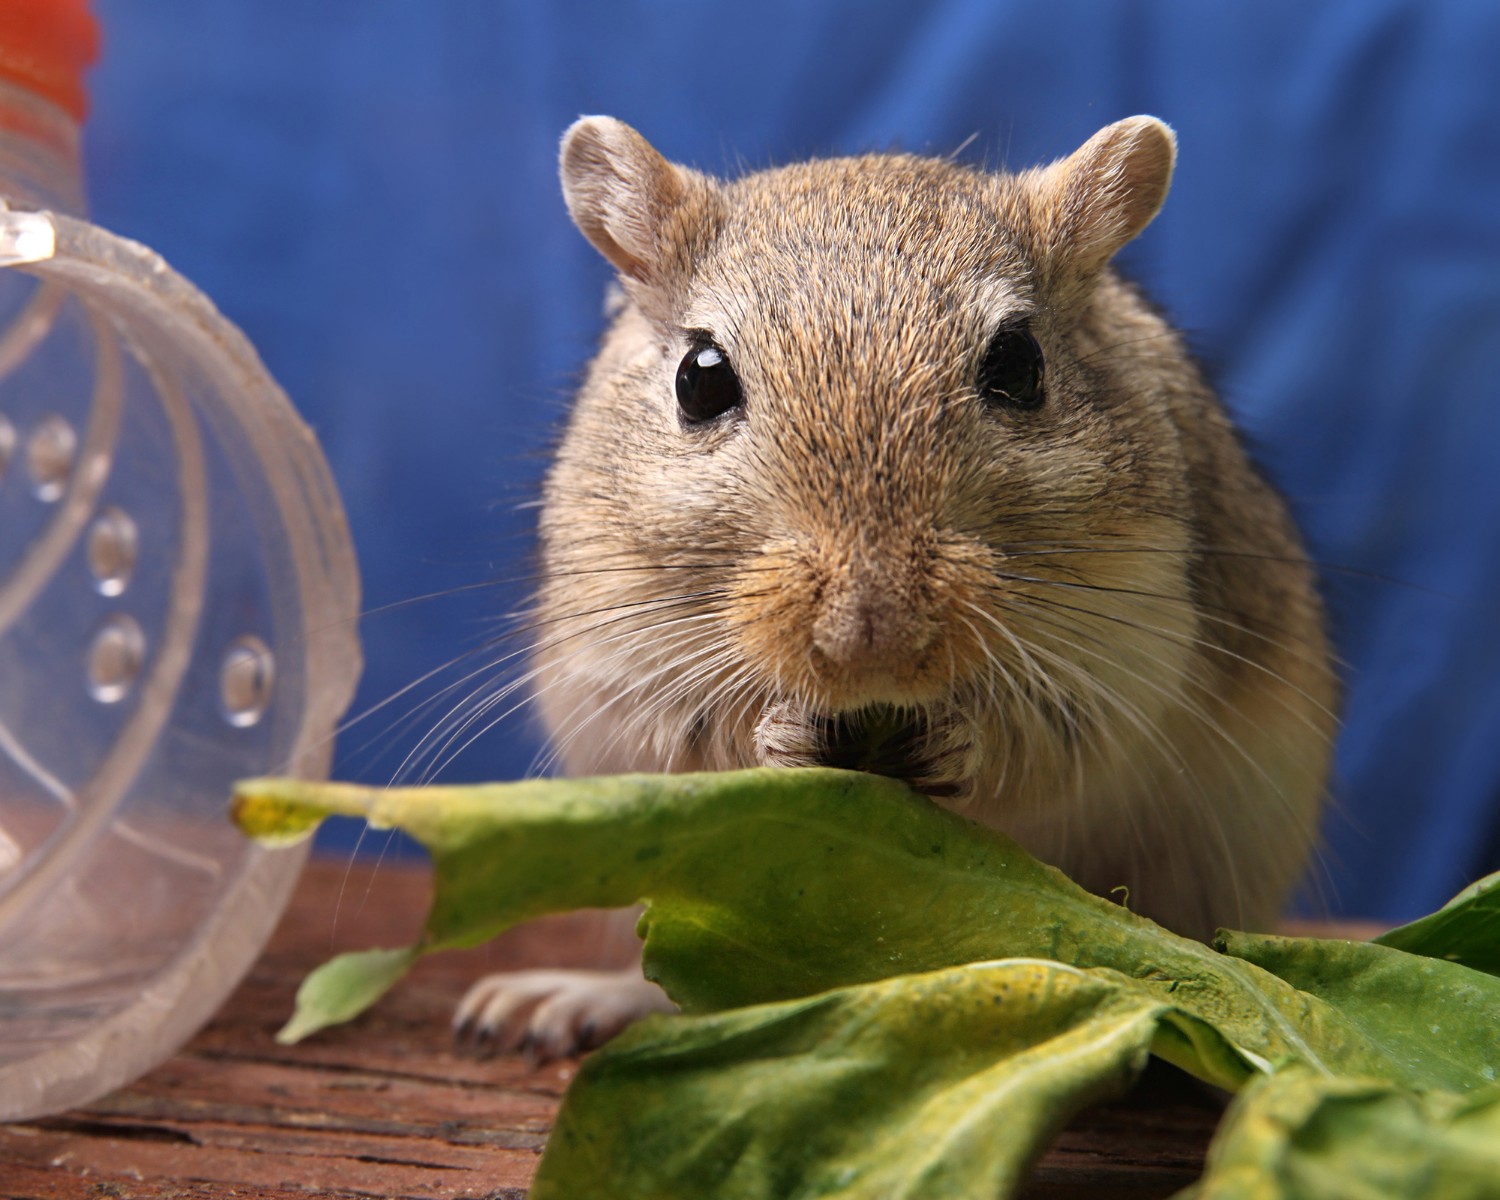 Estes roedores costumam se alimentar de folhas (Foto: Canva/Creative Commons)